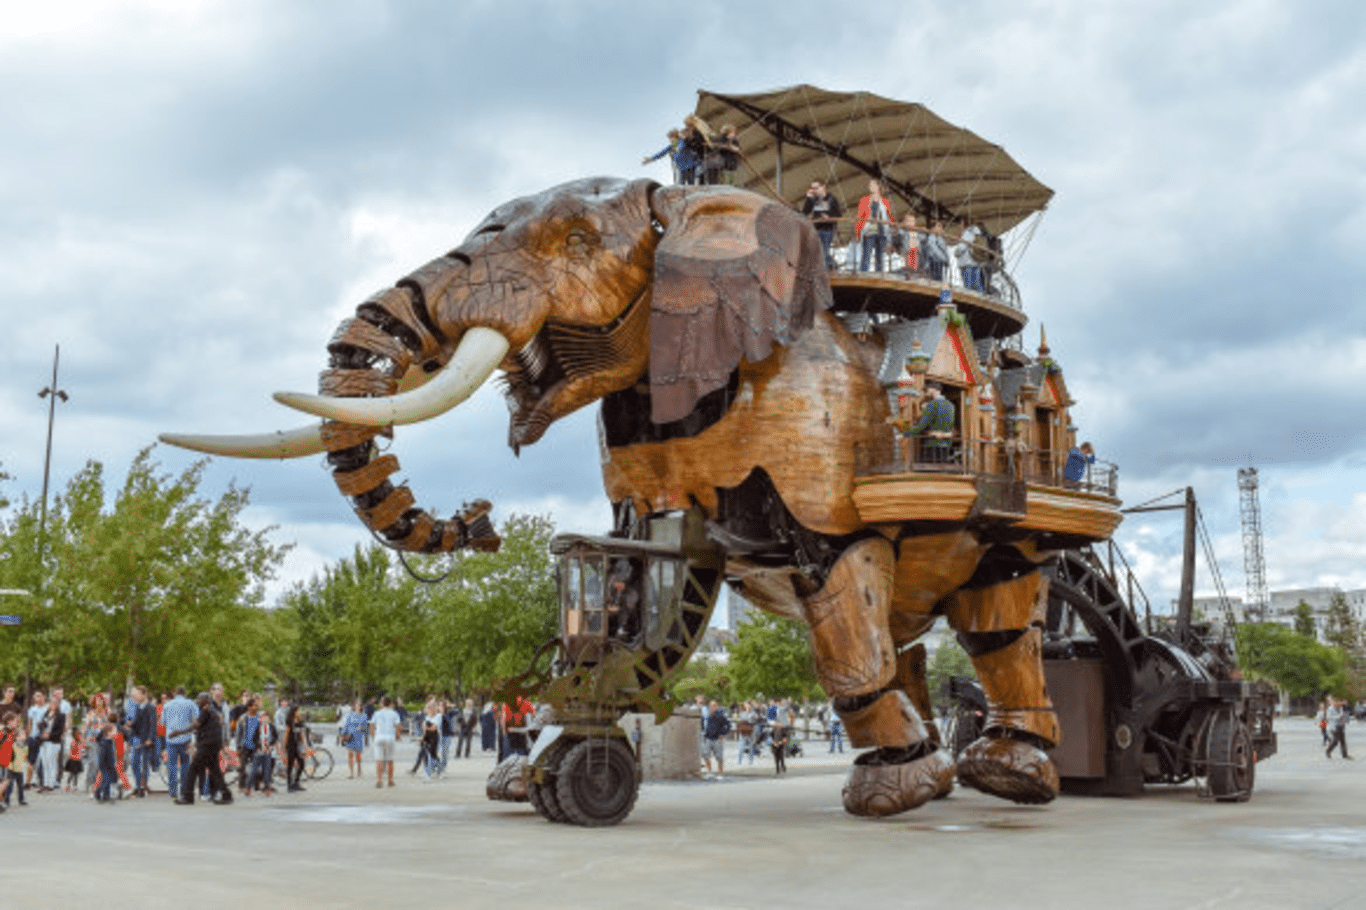 How a Gigantic, Mechanical Elephant Revitalized a Struggling City